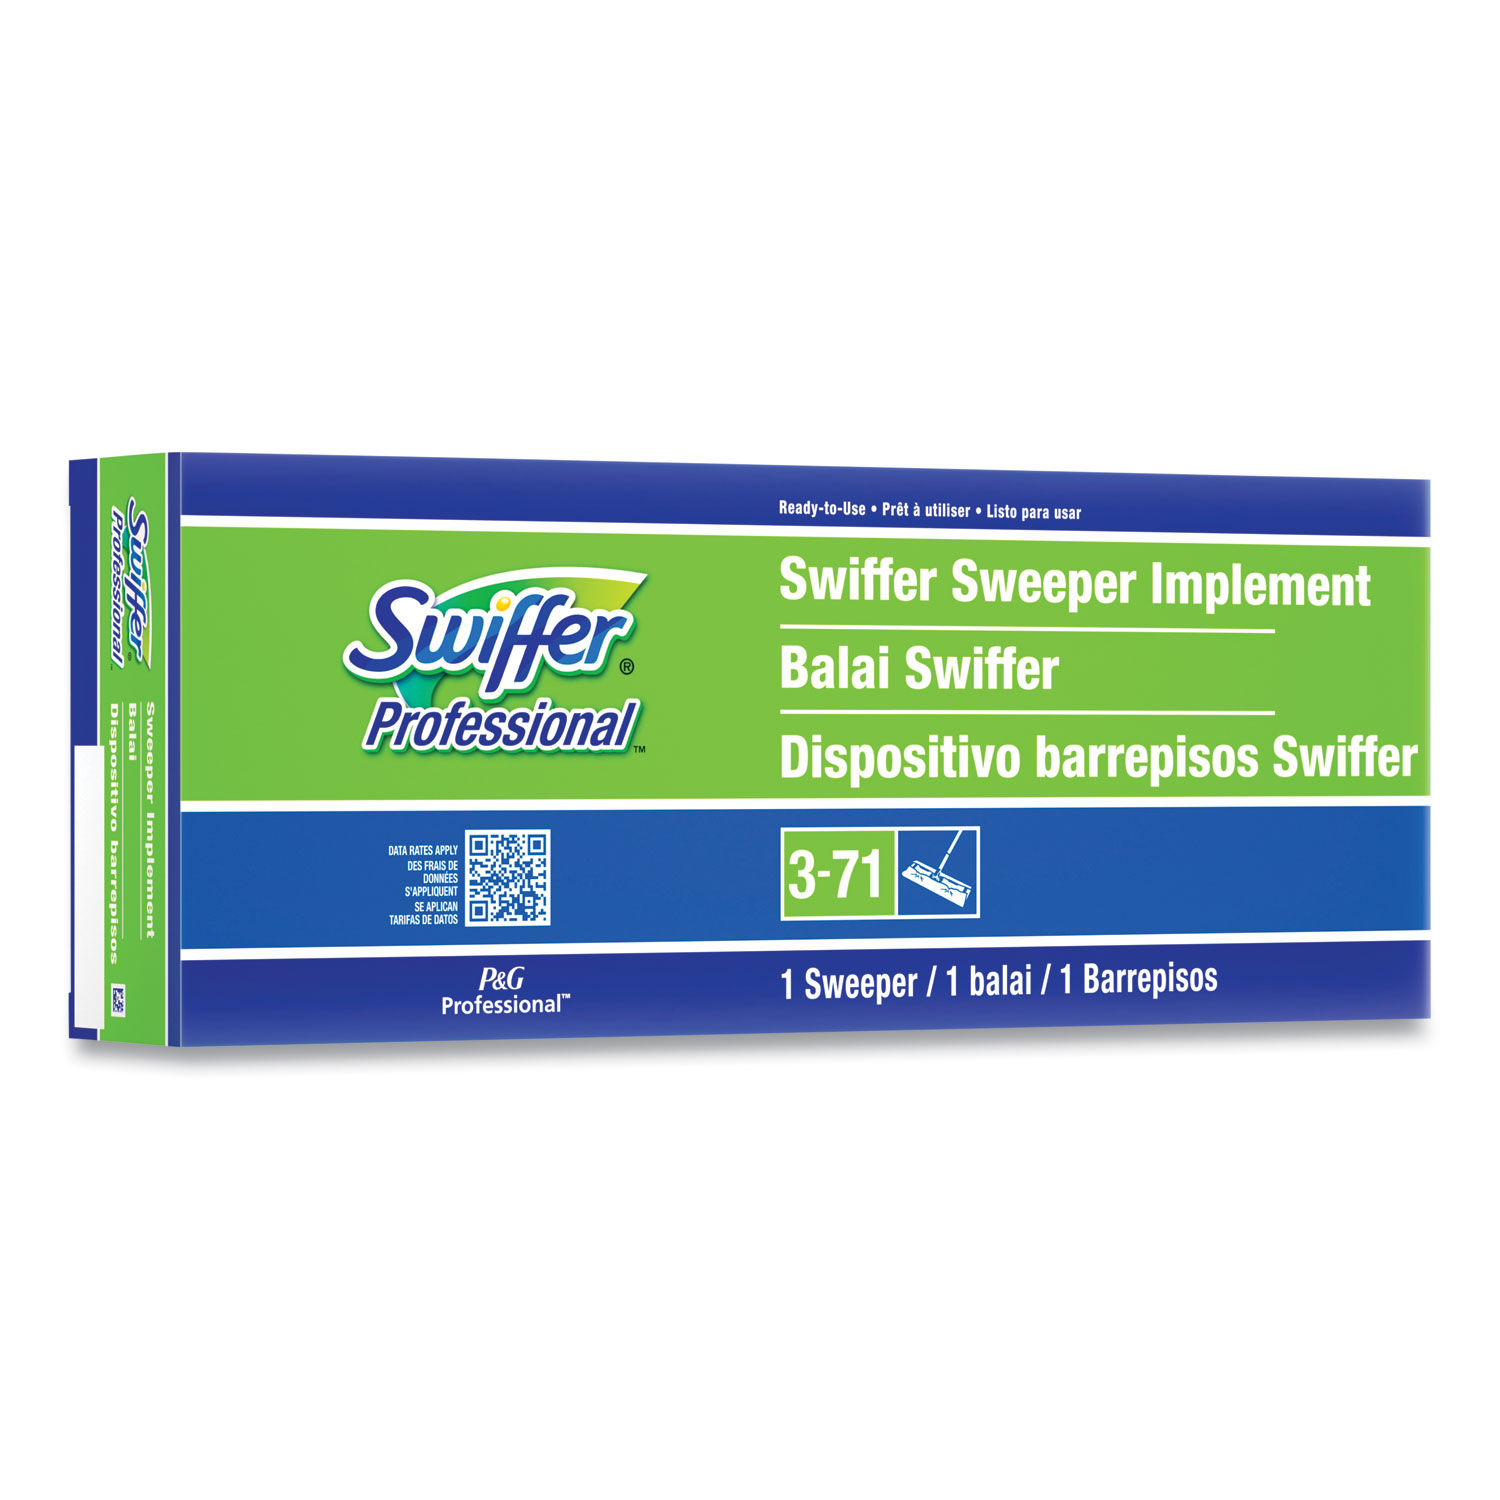 Swiffer Sweeper Dry Wet Starter Kit 46 H x 10 W x 8 D SilverGreen